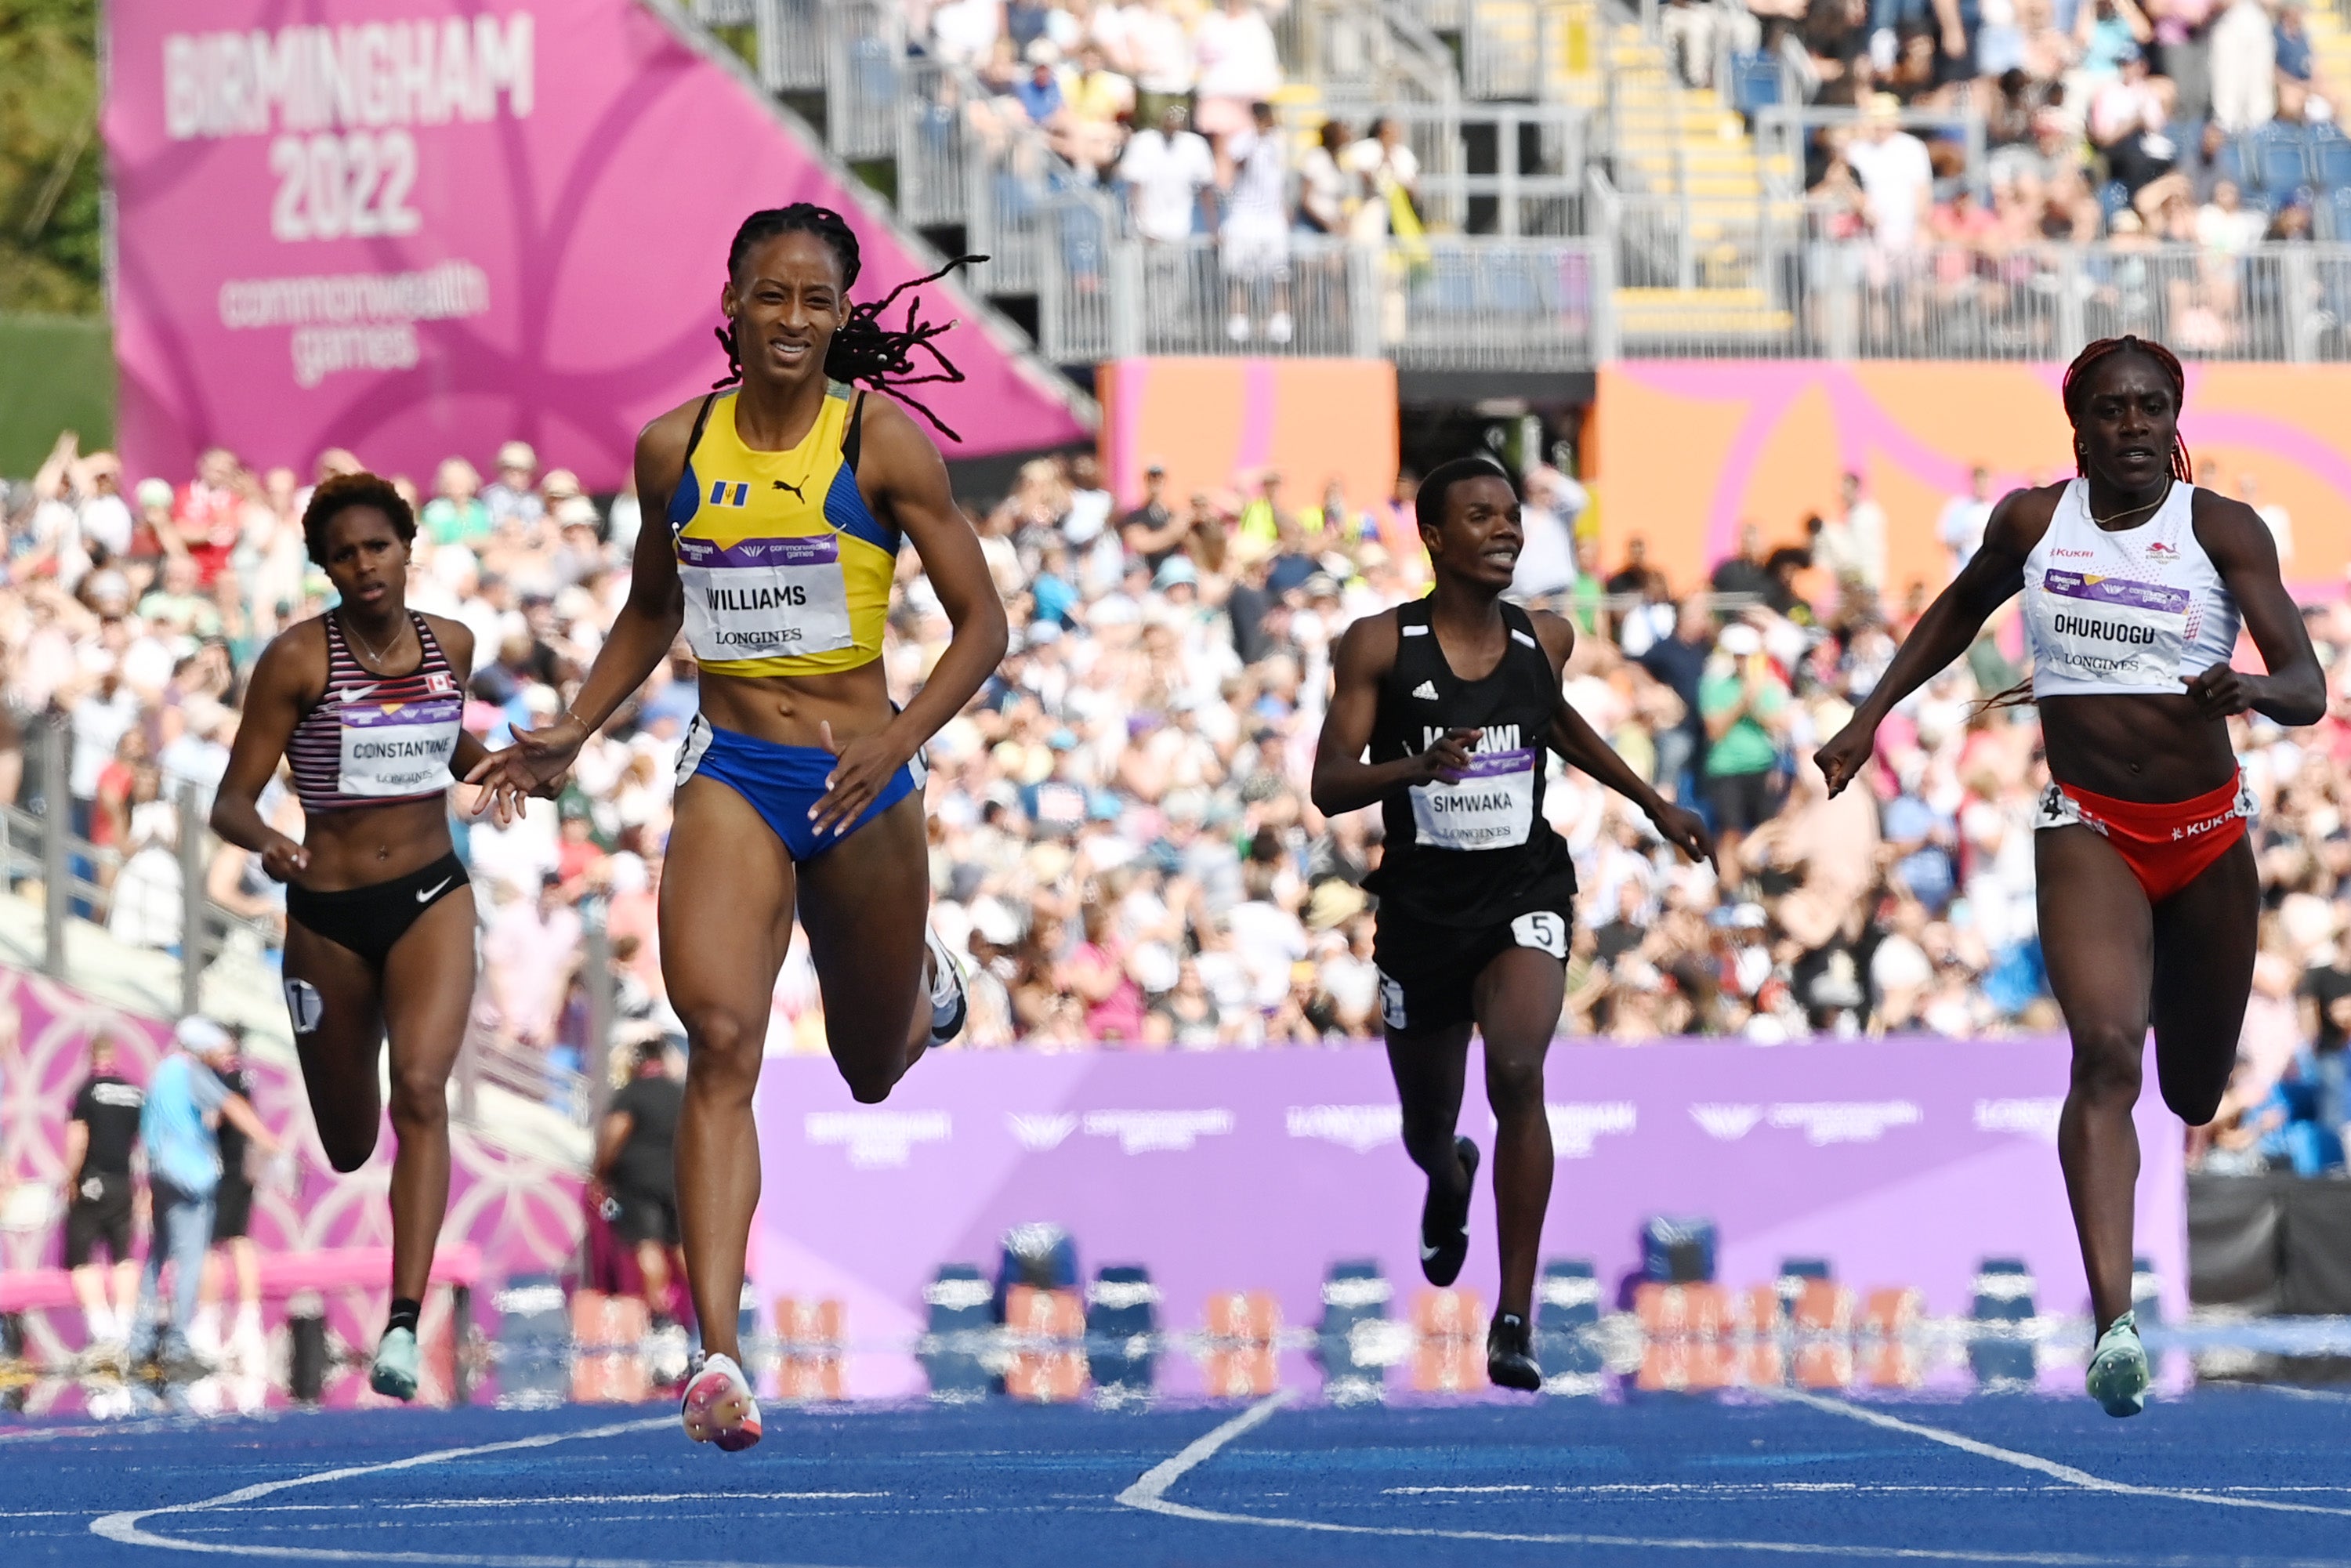 Sada Williams of Team Barbados crosses the finish line to win gold